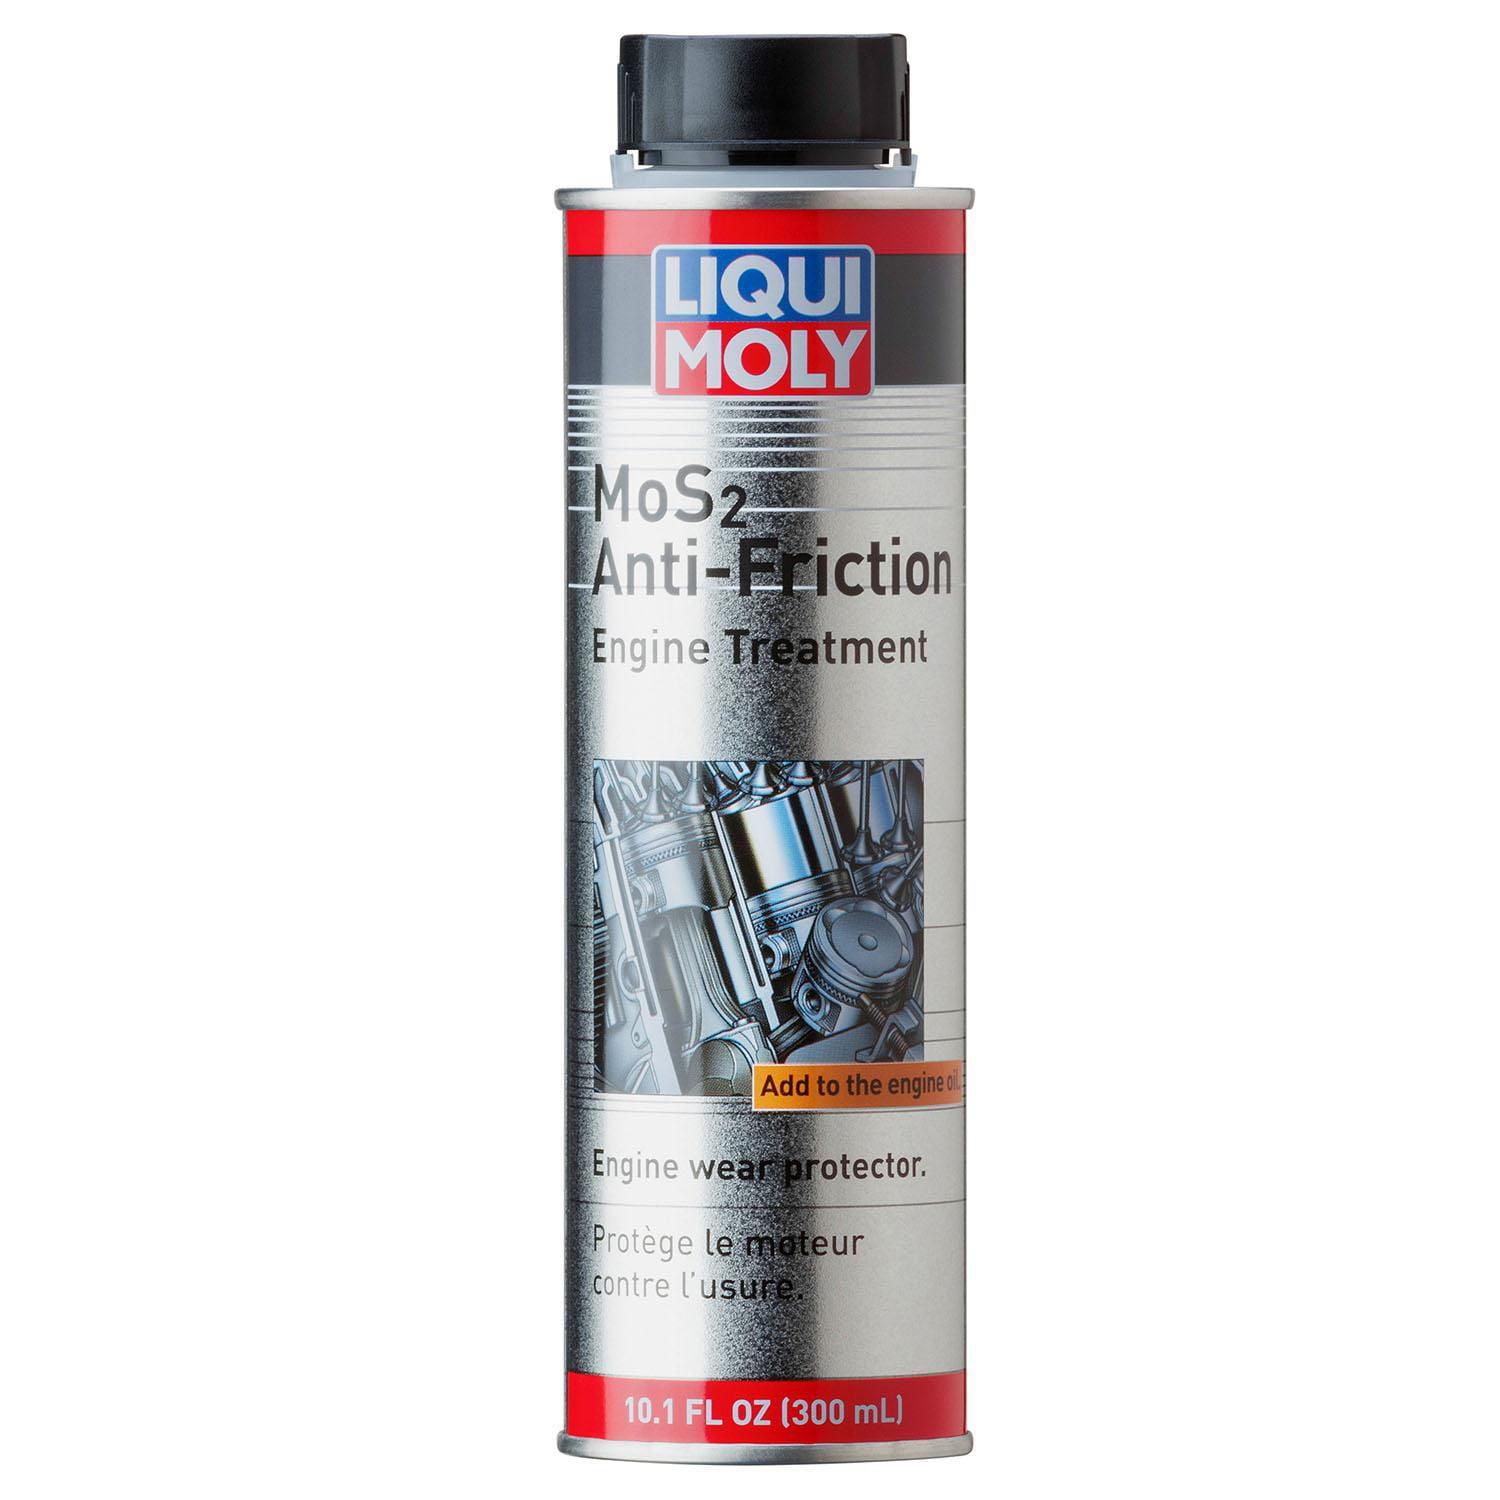 Exhaustmounting paste LIQUI MOLY 300 g buy online, 12,95 €